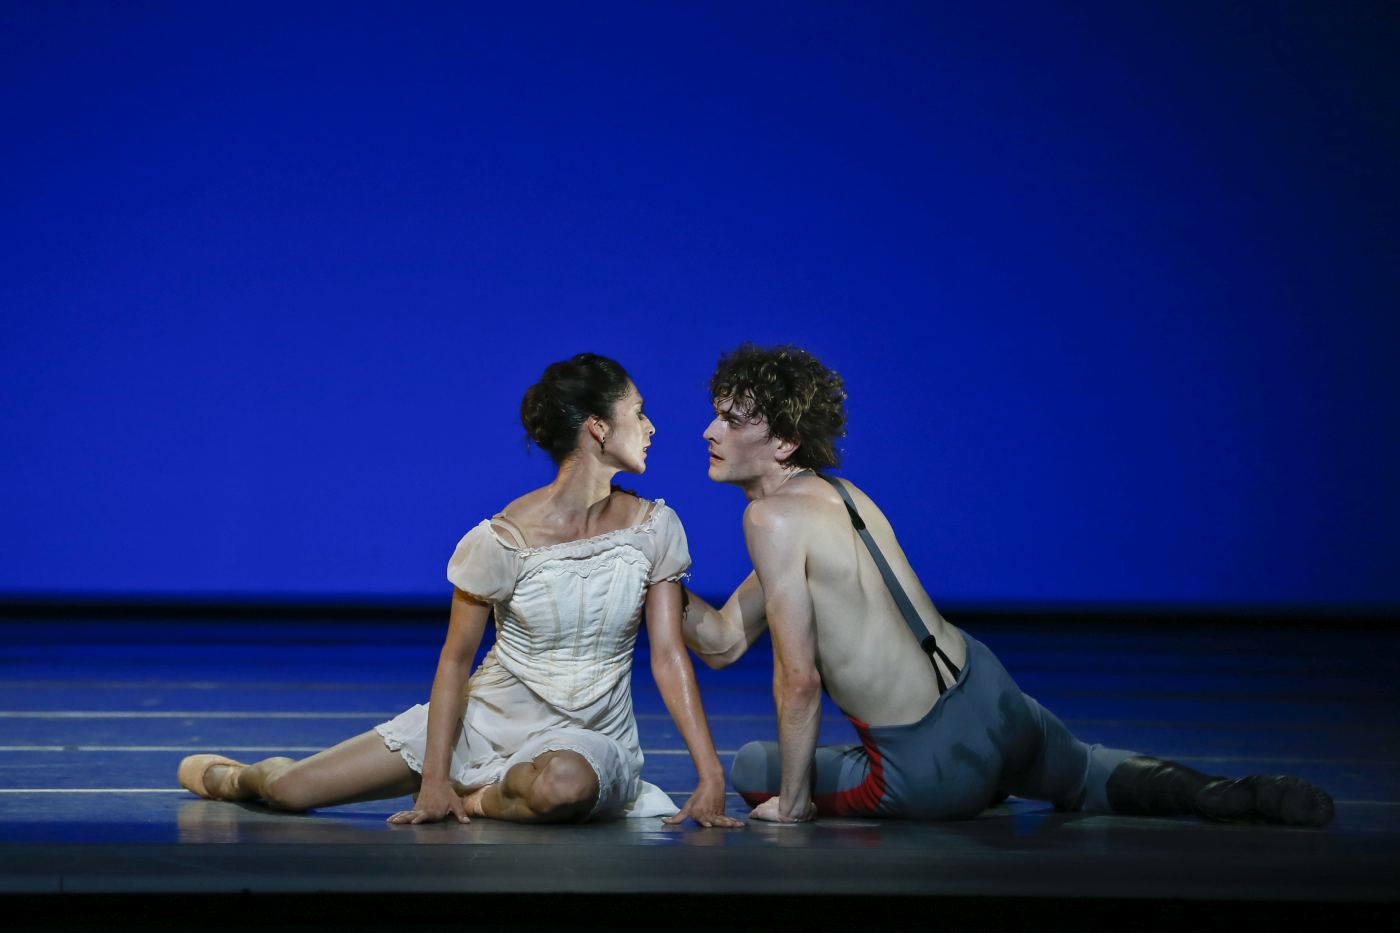 11. R.Hendricks (Anna Karenina) and C.Linnane (Count Alexei Vronsky), “Anna Karenina” by Y.Possokhov, The Australian Ballet 2022 © J.Busby